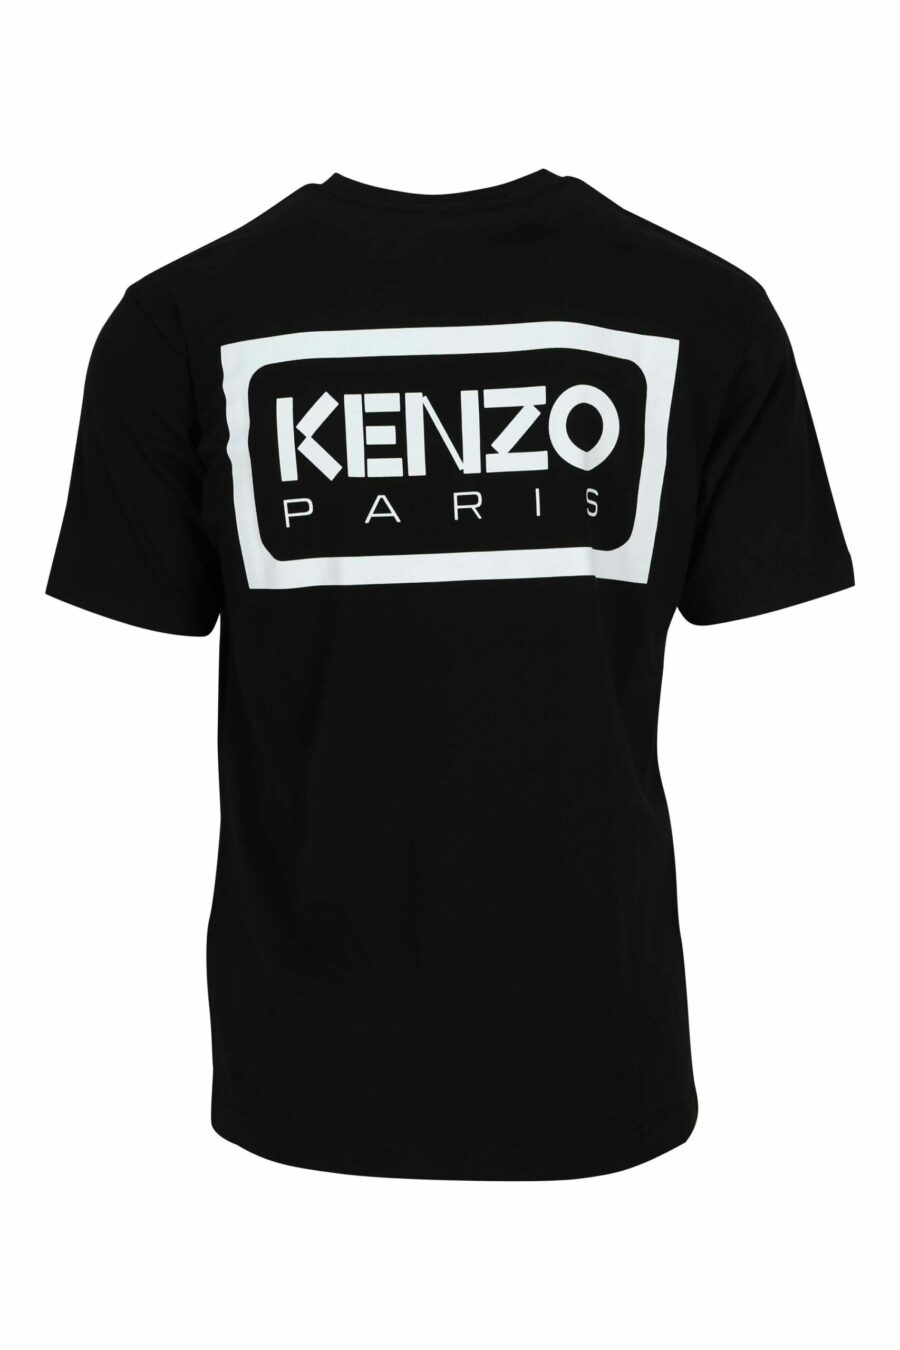 T-shirt schwarz mit Minilogue "KP classic" - 3612230624443 1 skaliert